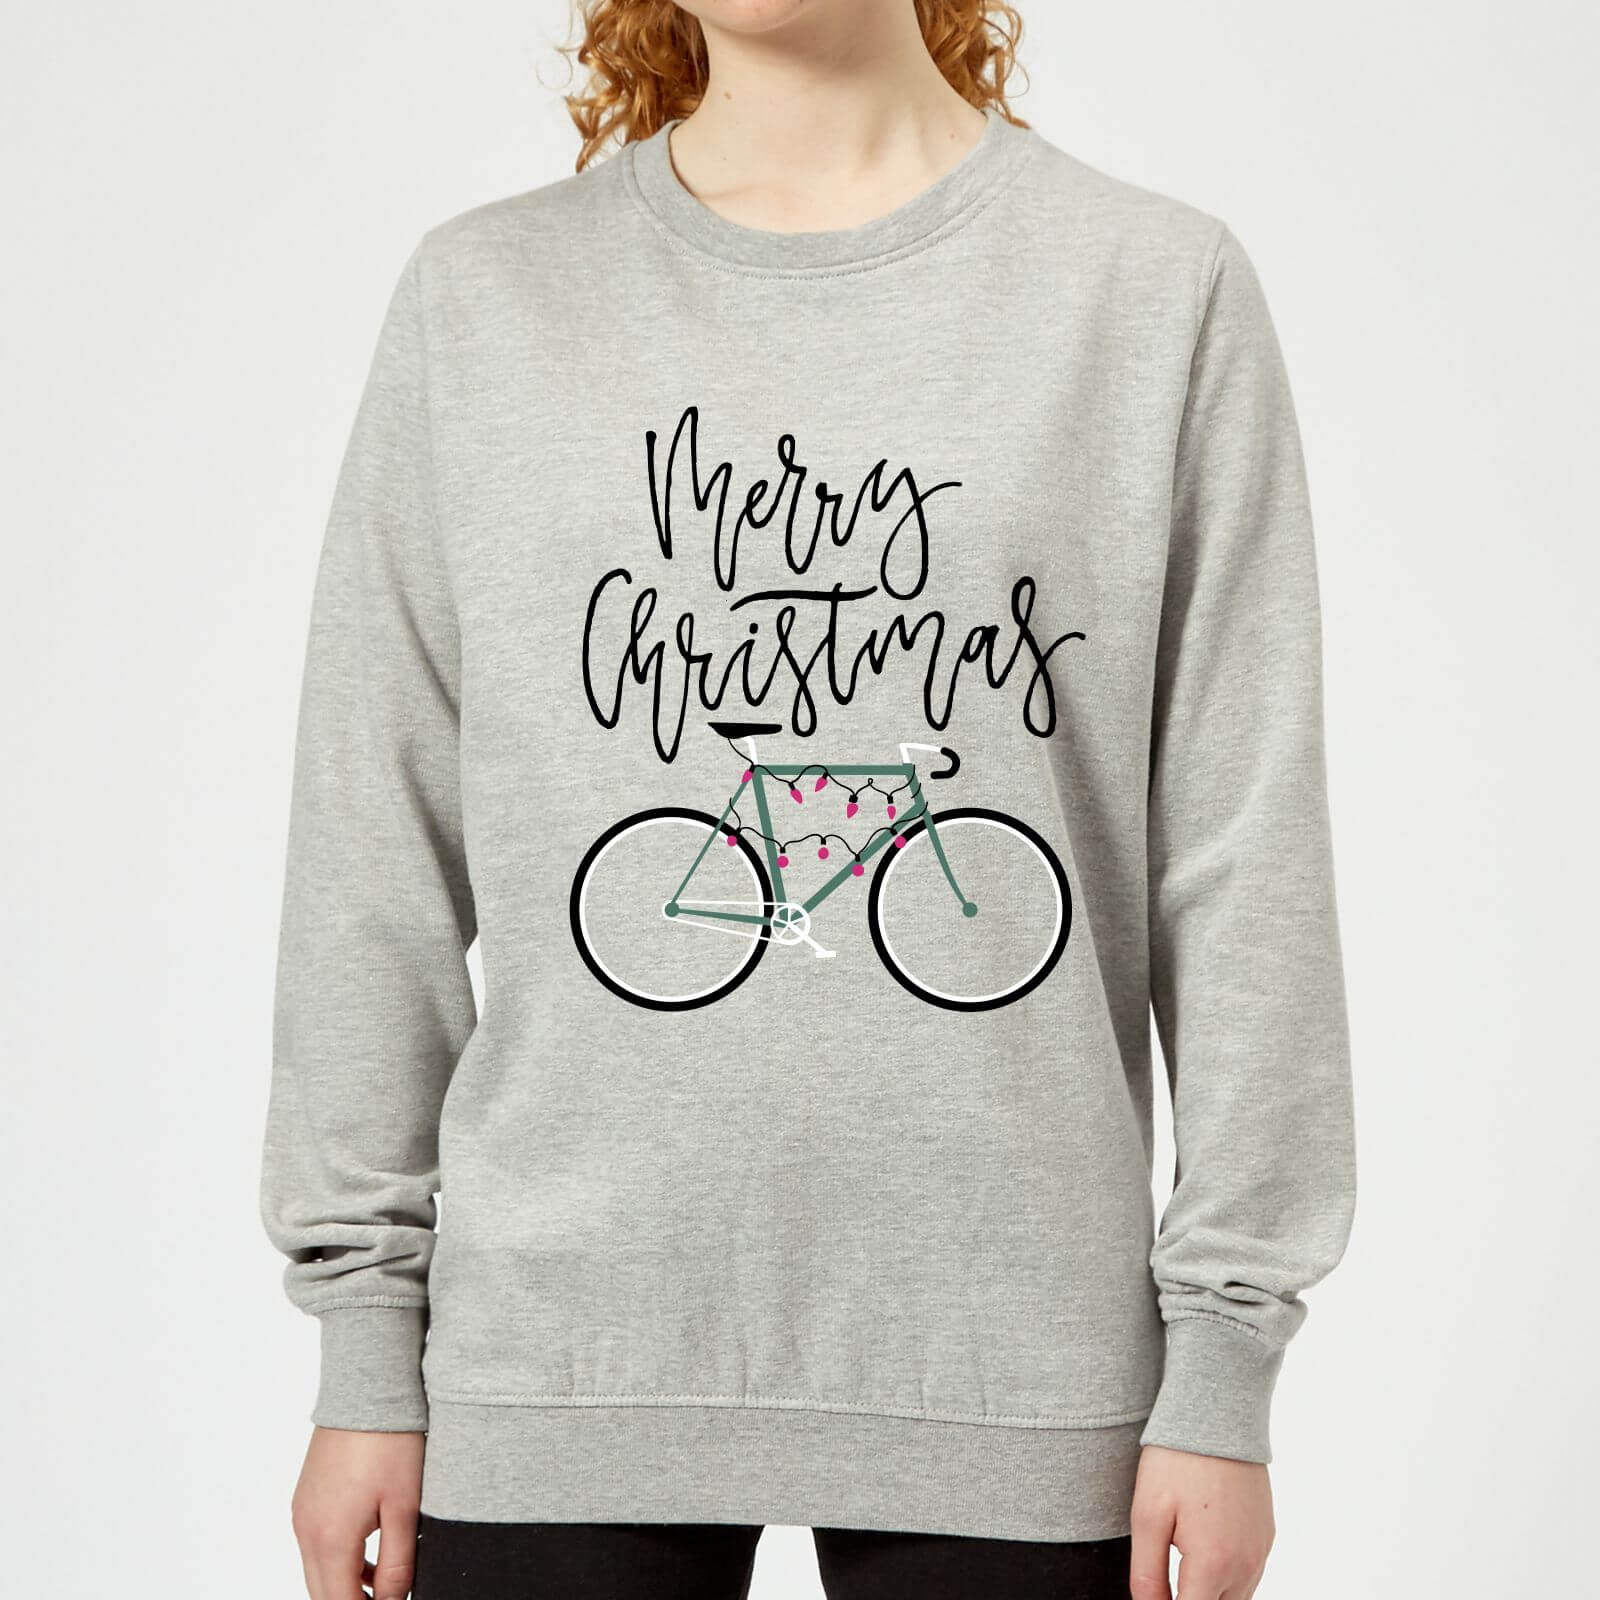 Bike Lights Women's Christmas Sweatshirt - Grey - S - Grau